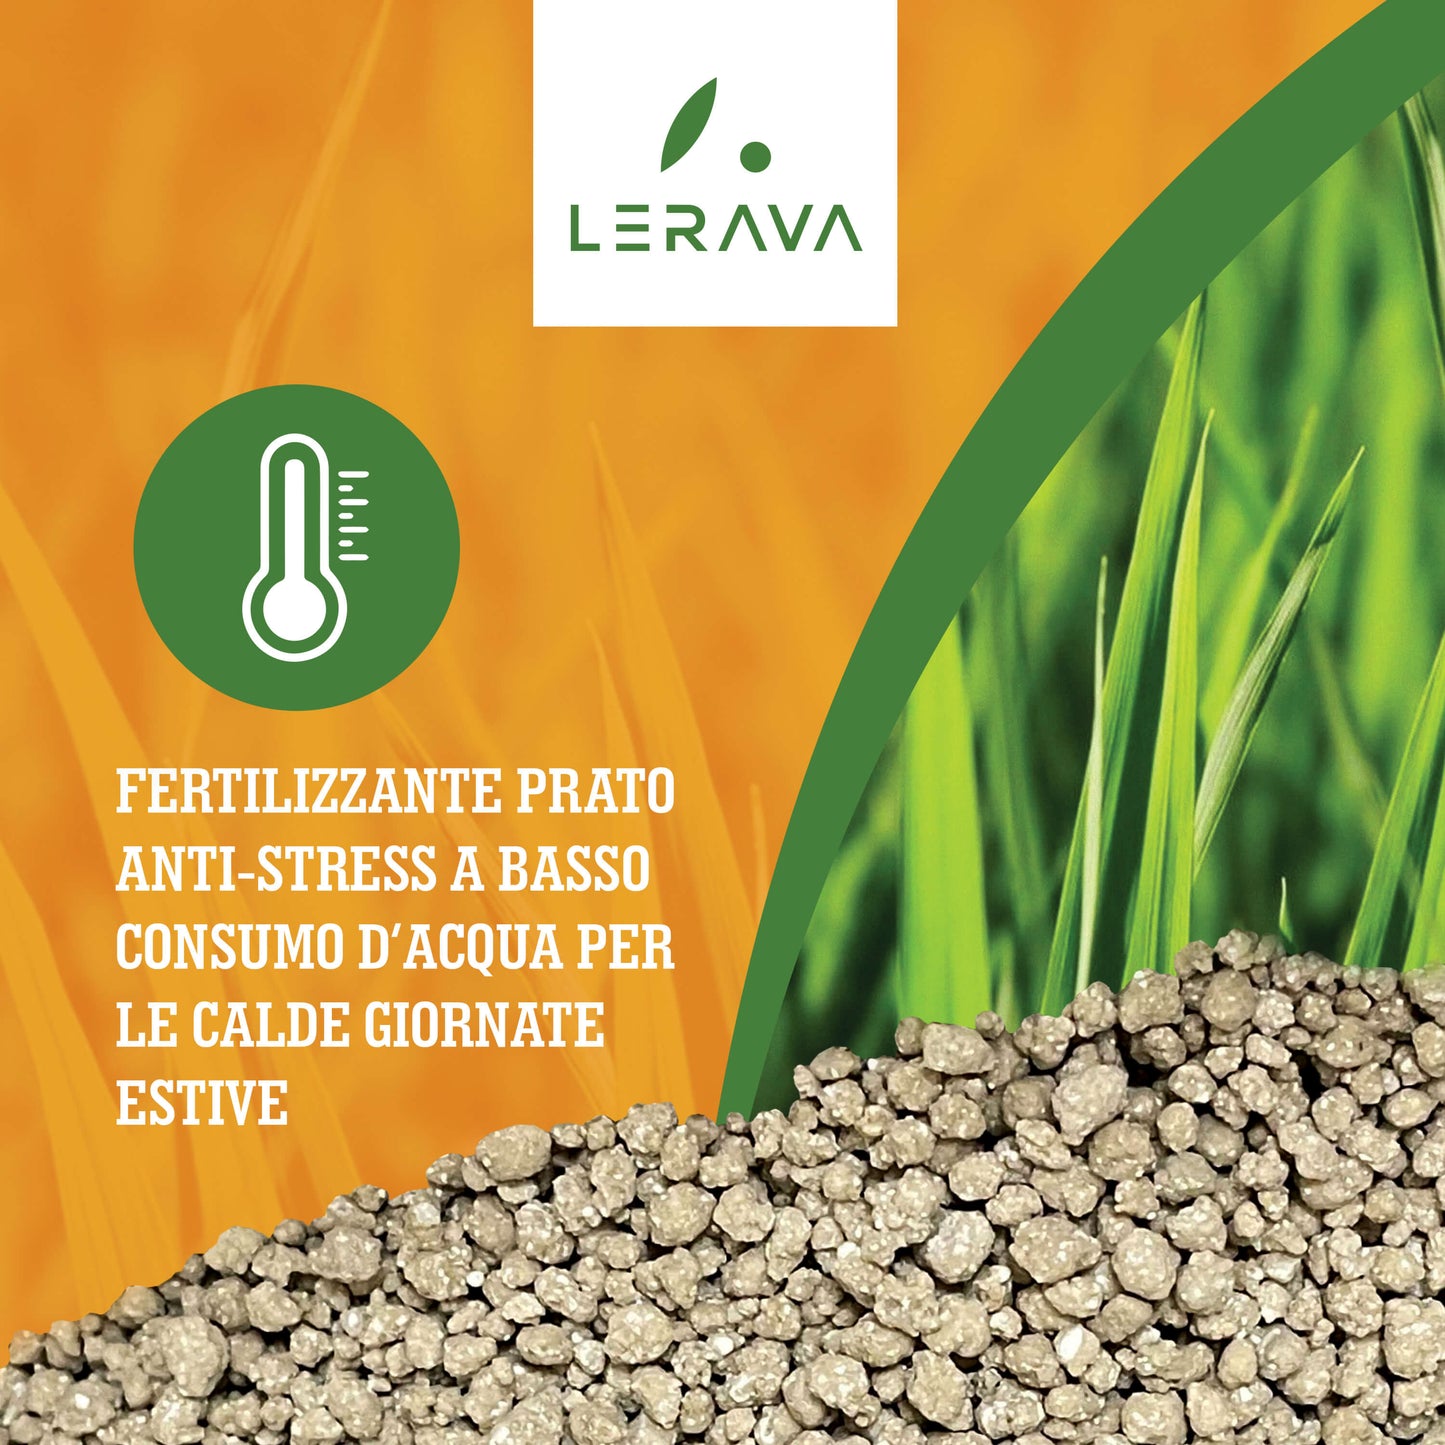 Summer-lawn fertilizer